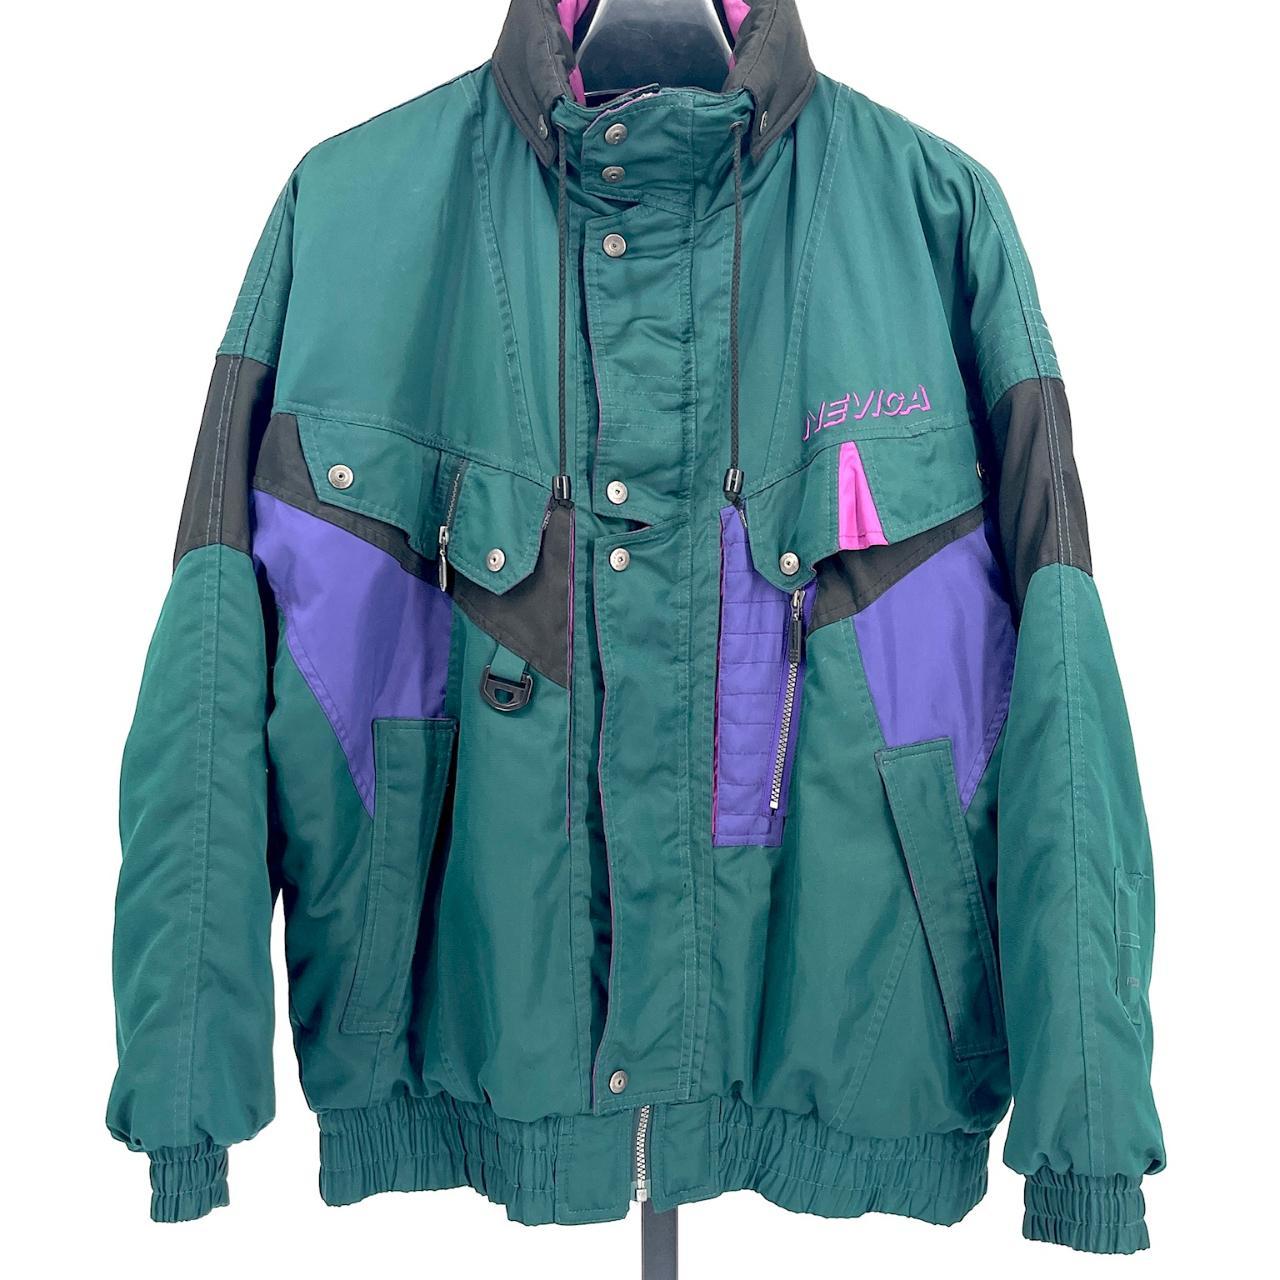 Product Image 1 - Deep green Nevica ski jacket